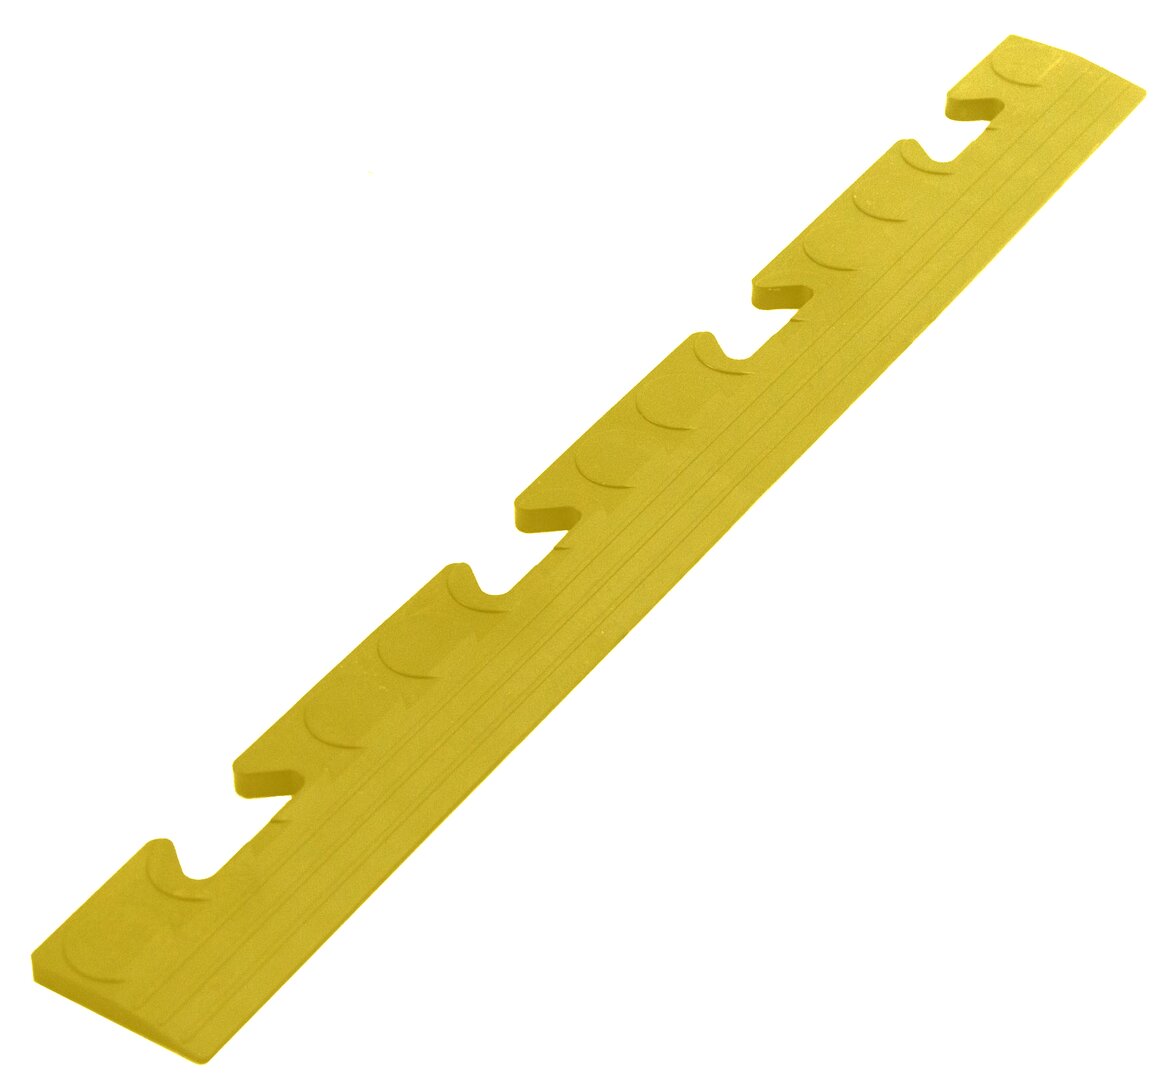 Žlutý vinylový PVC nájezd "samice" pro dlaždice Tenax (bubbles) - délka 48 cm, šířka 5,1 cm, výška 0,8 cm